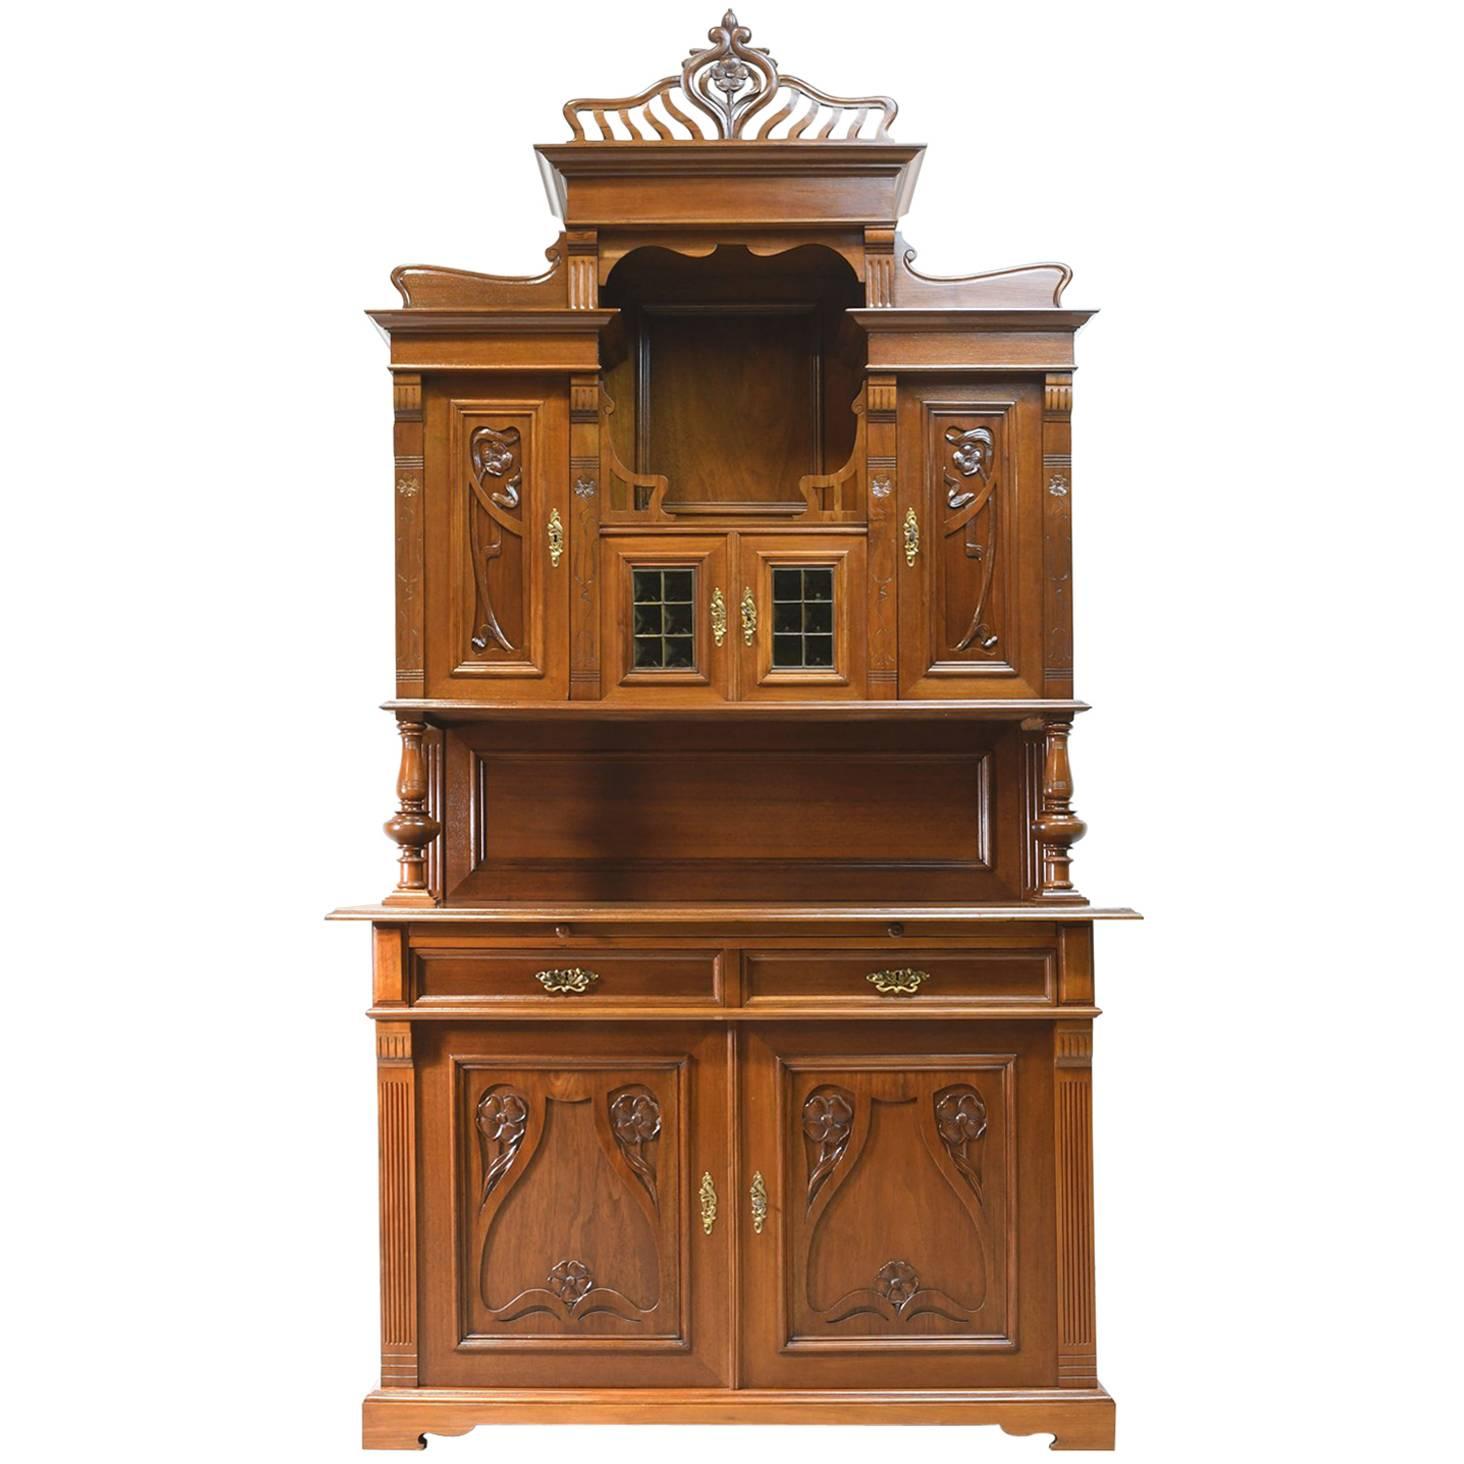 Early 20th Century Art Nouveau Buffet Cupboard or Bar Cabinet in French Walnut